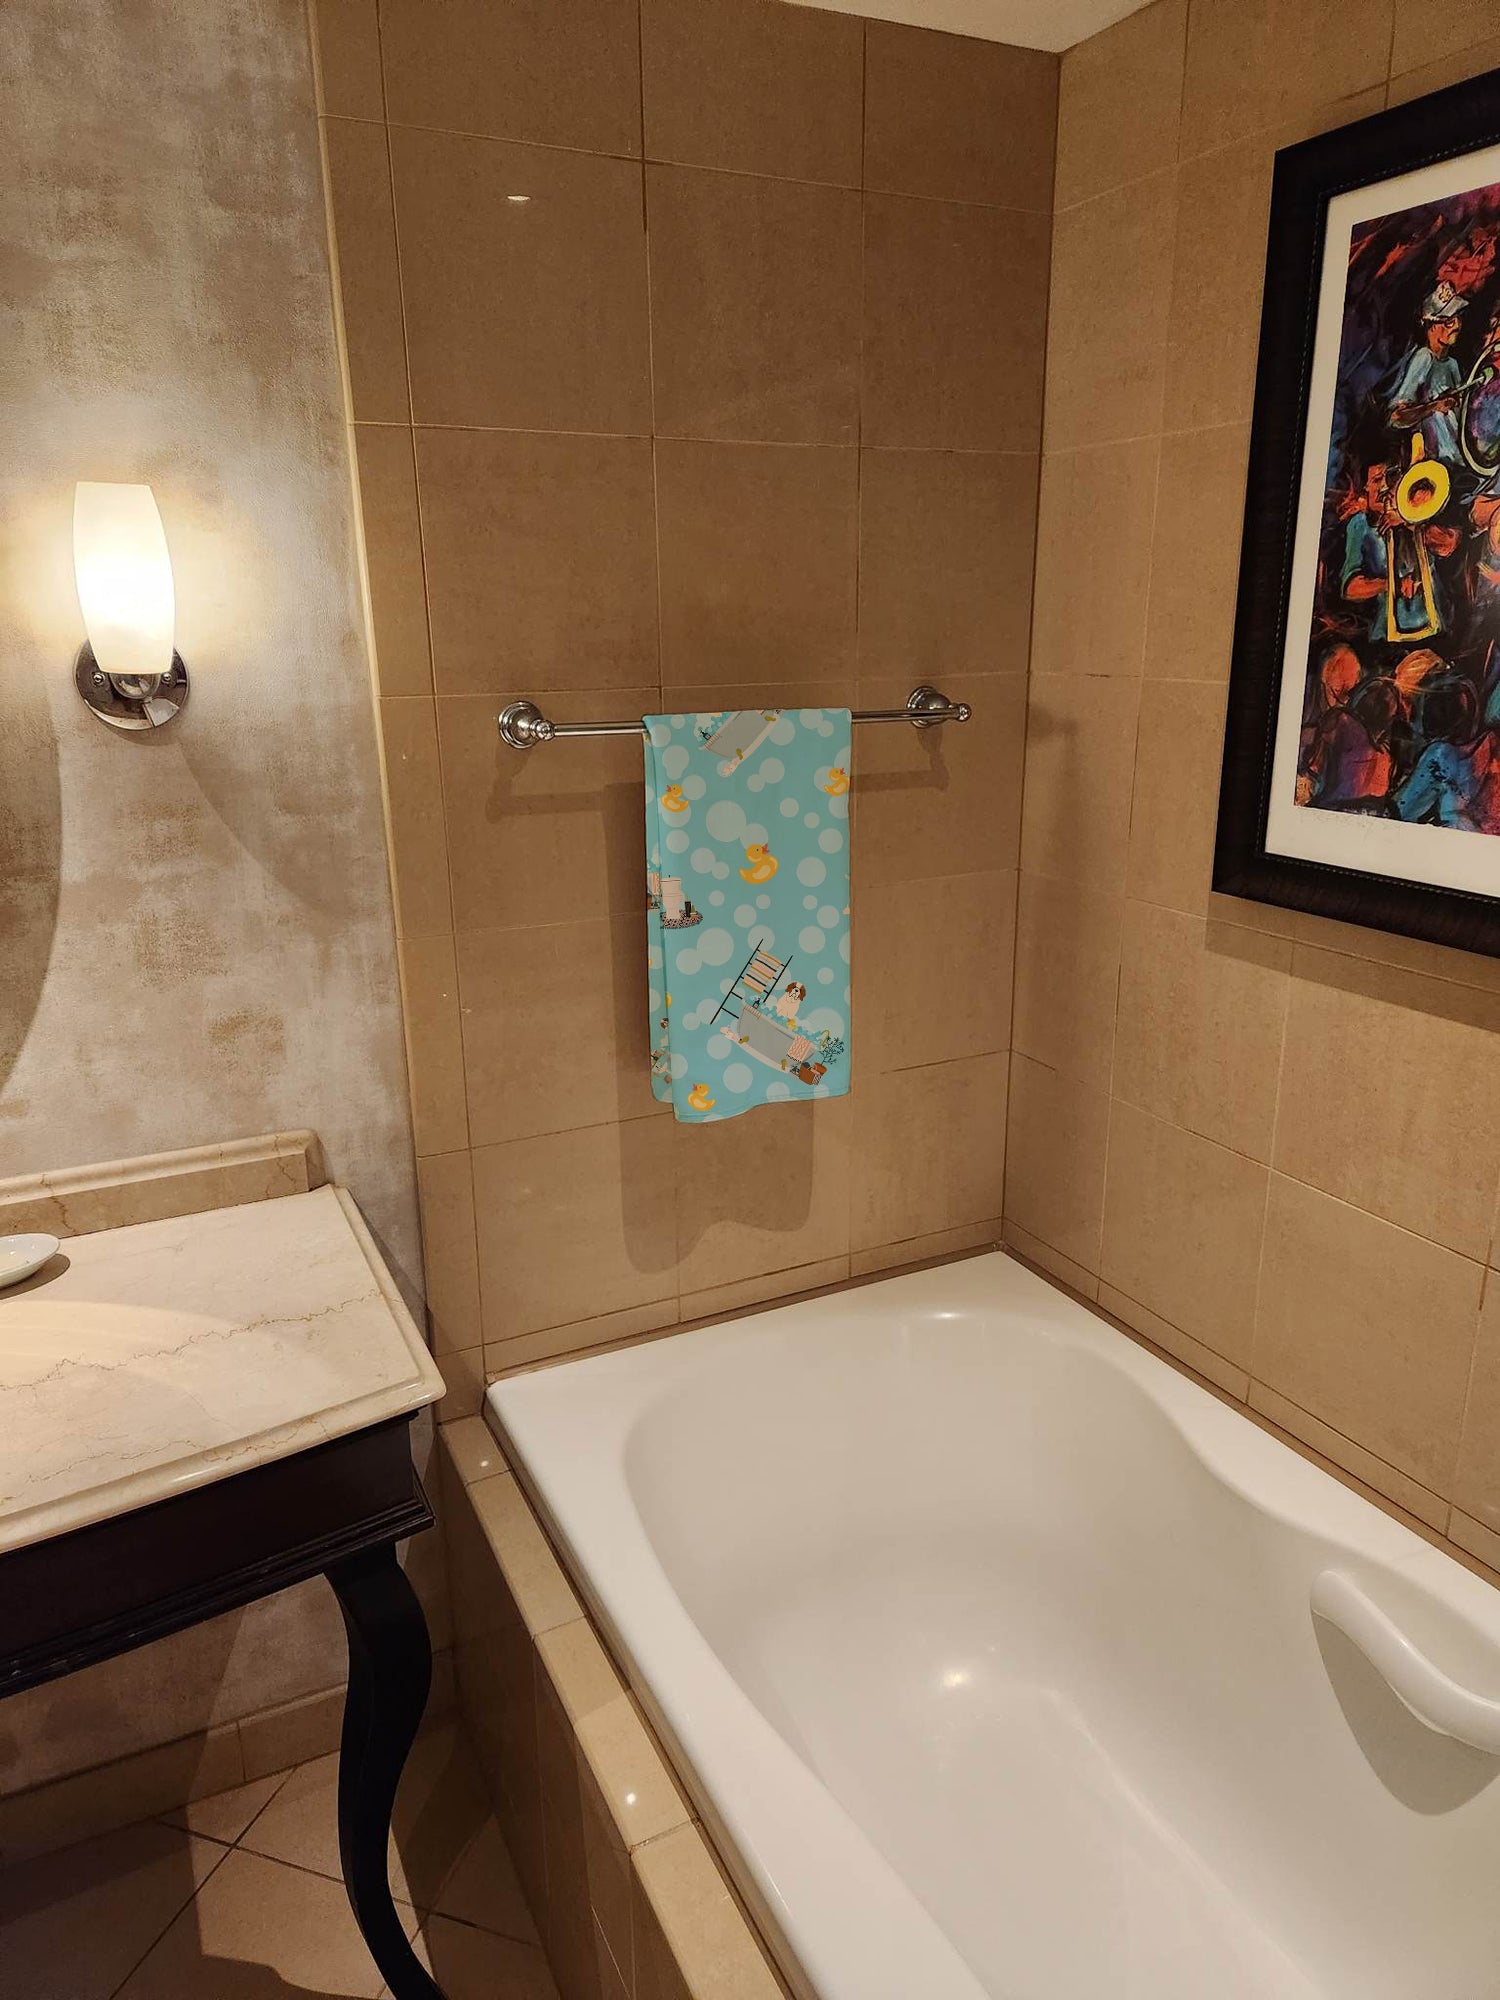 Saint Bernard in Bathtub Bath Towel Large